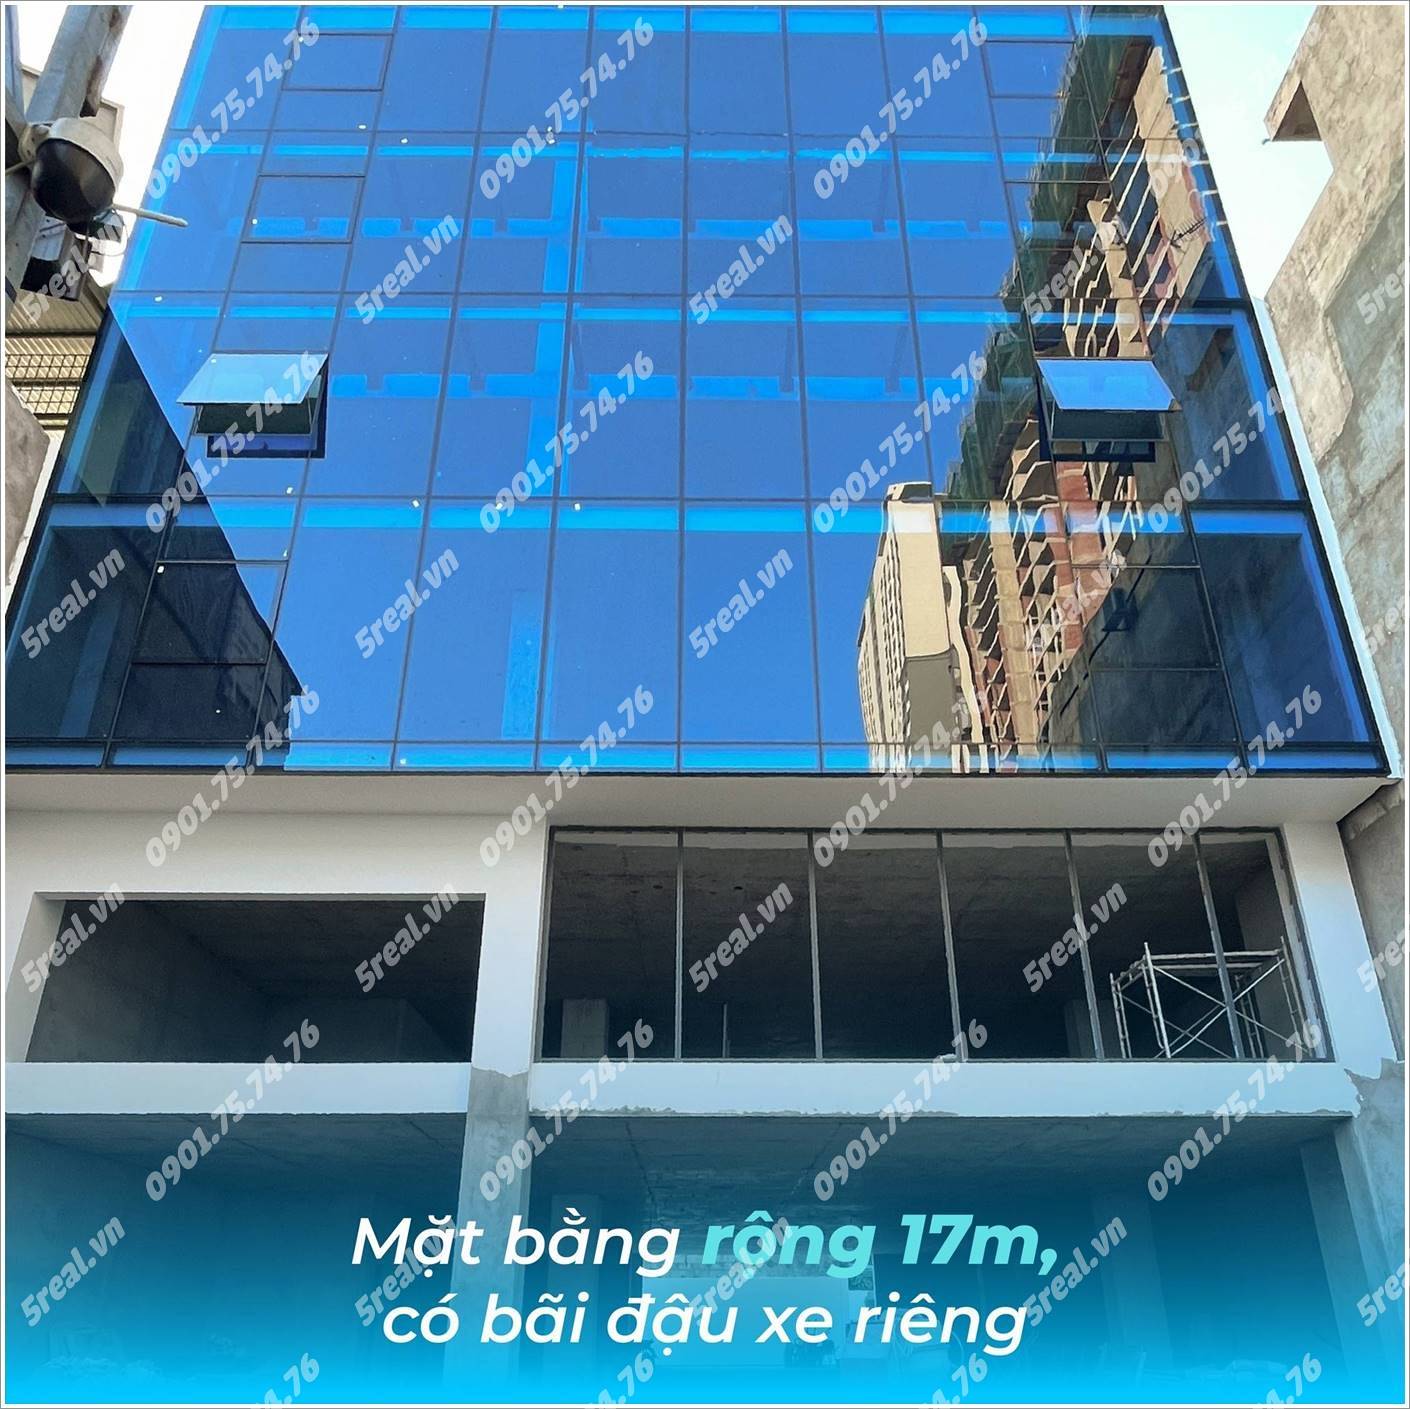 halo-building-co-bac-cho-thue-van-phong-quan-1-5real.vn-01